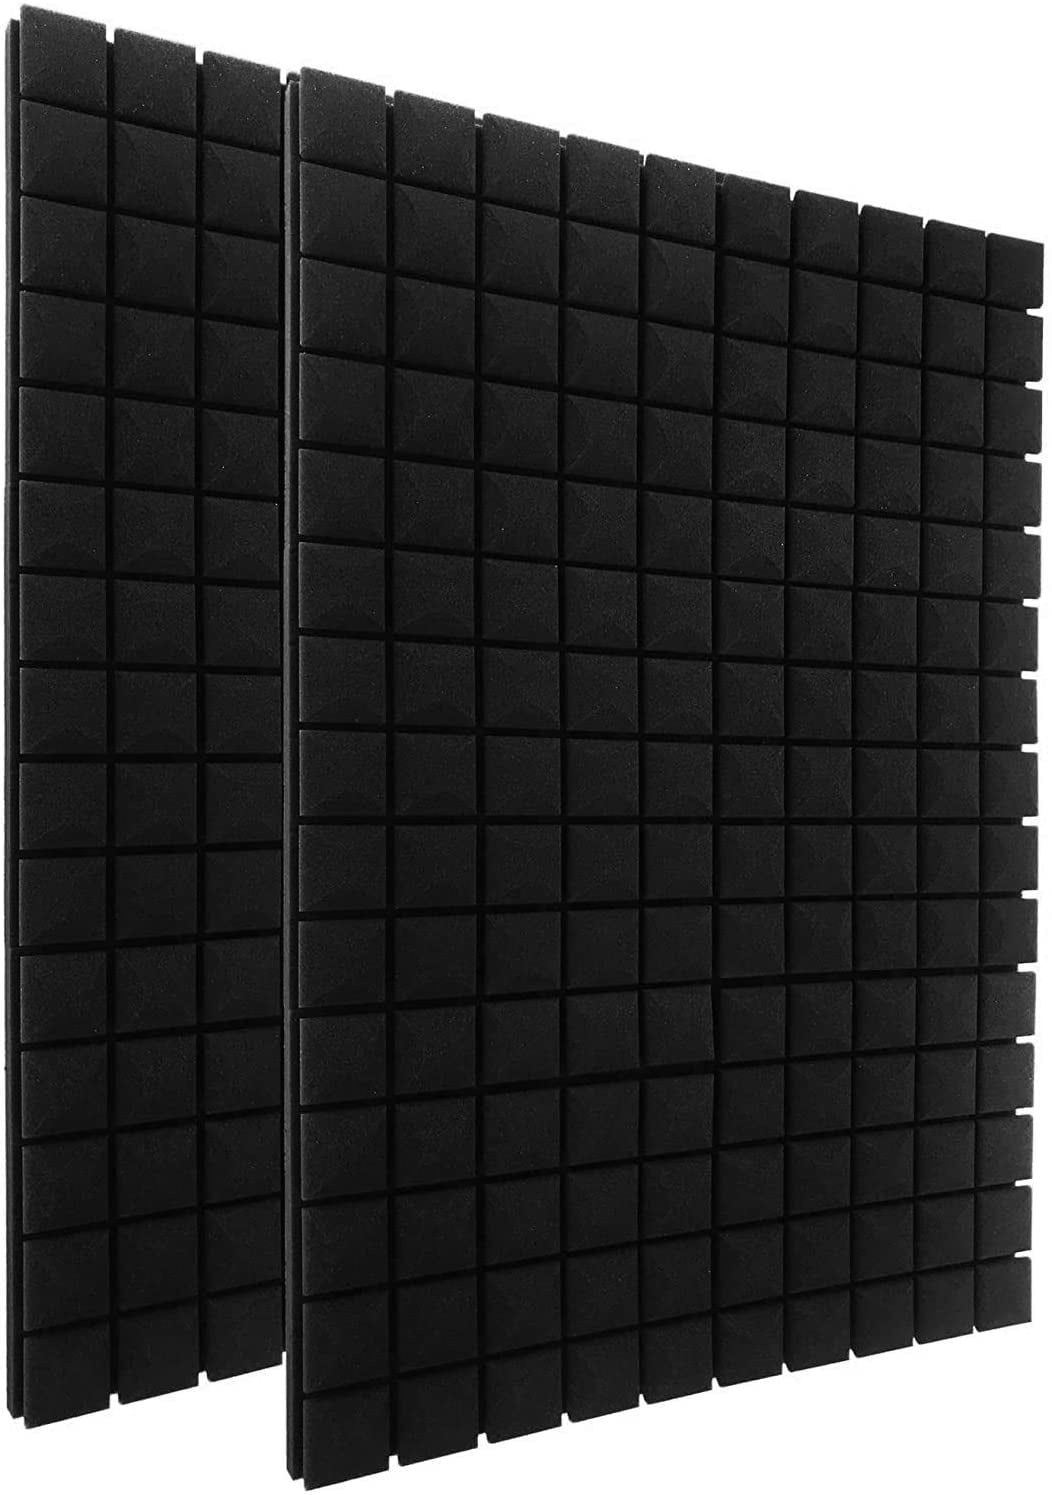 Acoustic Foam Panels 12 Pack 12 Pack , Grey 2 X 12 X 12 Mushroom Studio Wedge Tiles Mushroom 9 Block Mushroom Design Sound Panels wedges Soundproof Sound Insulation Absorbing 